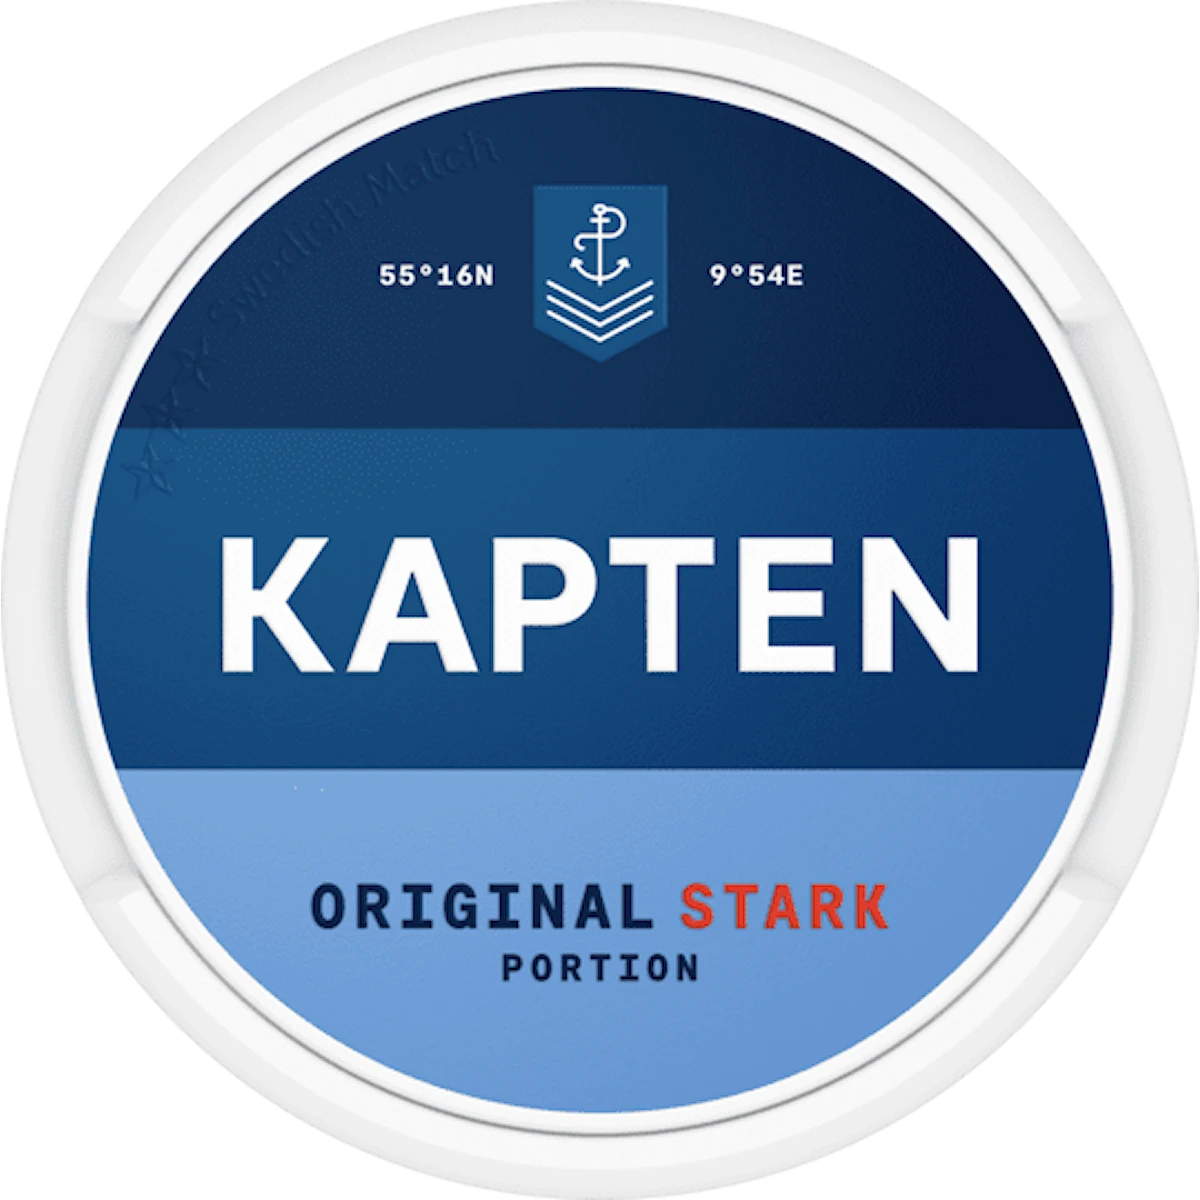 Kapten Original Portion Stark